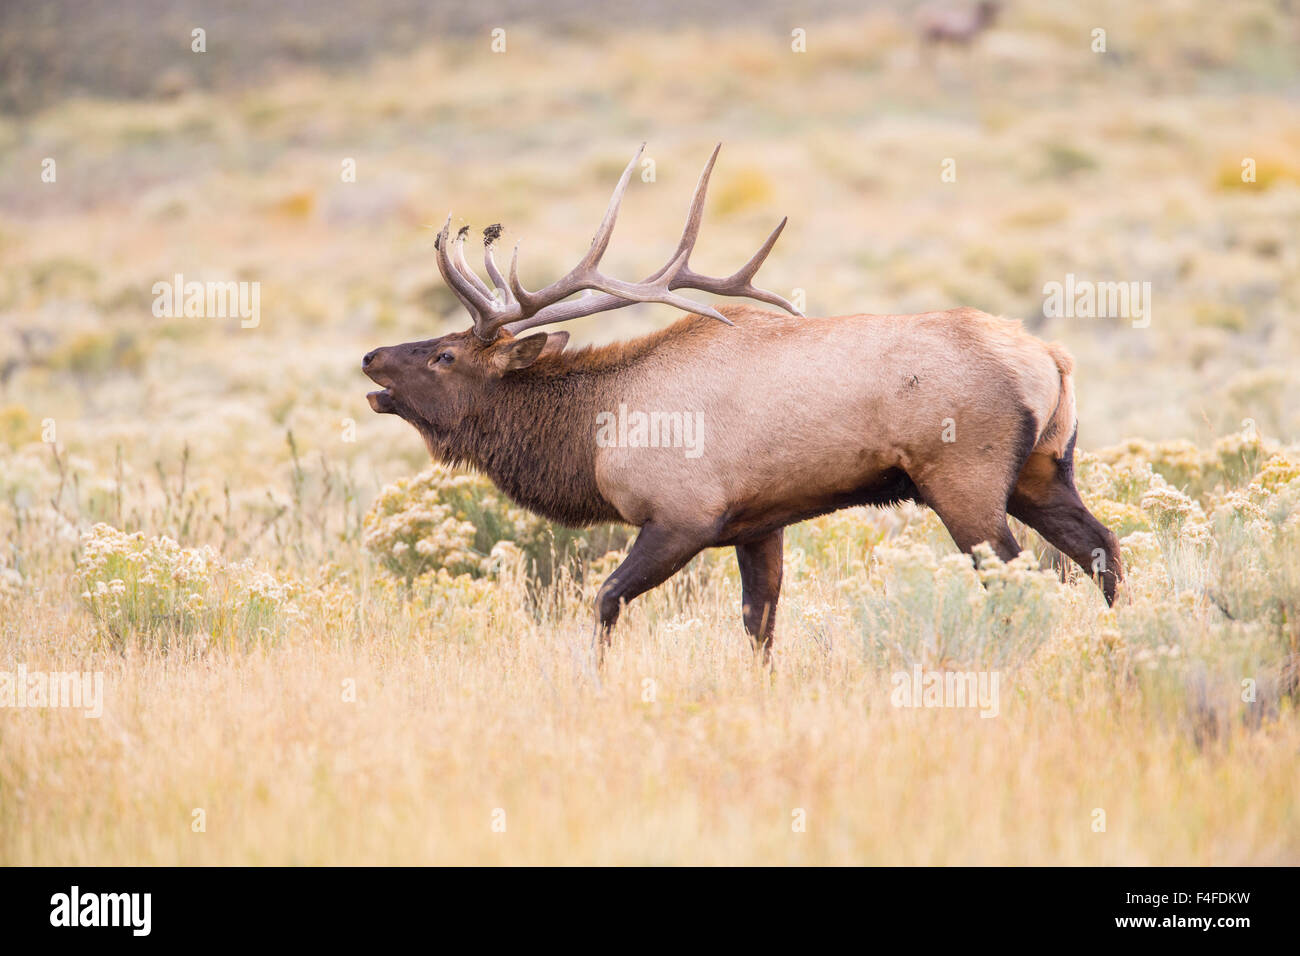 USA, Wyoming, Yellowstone National Park, Bull elk bugling Stock Photo